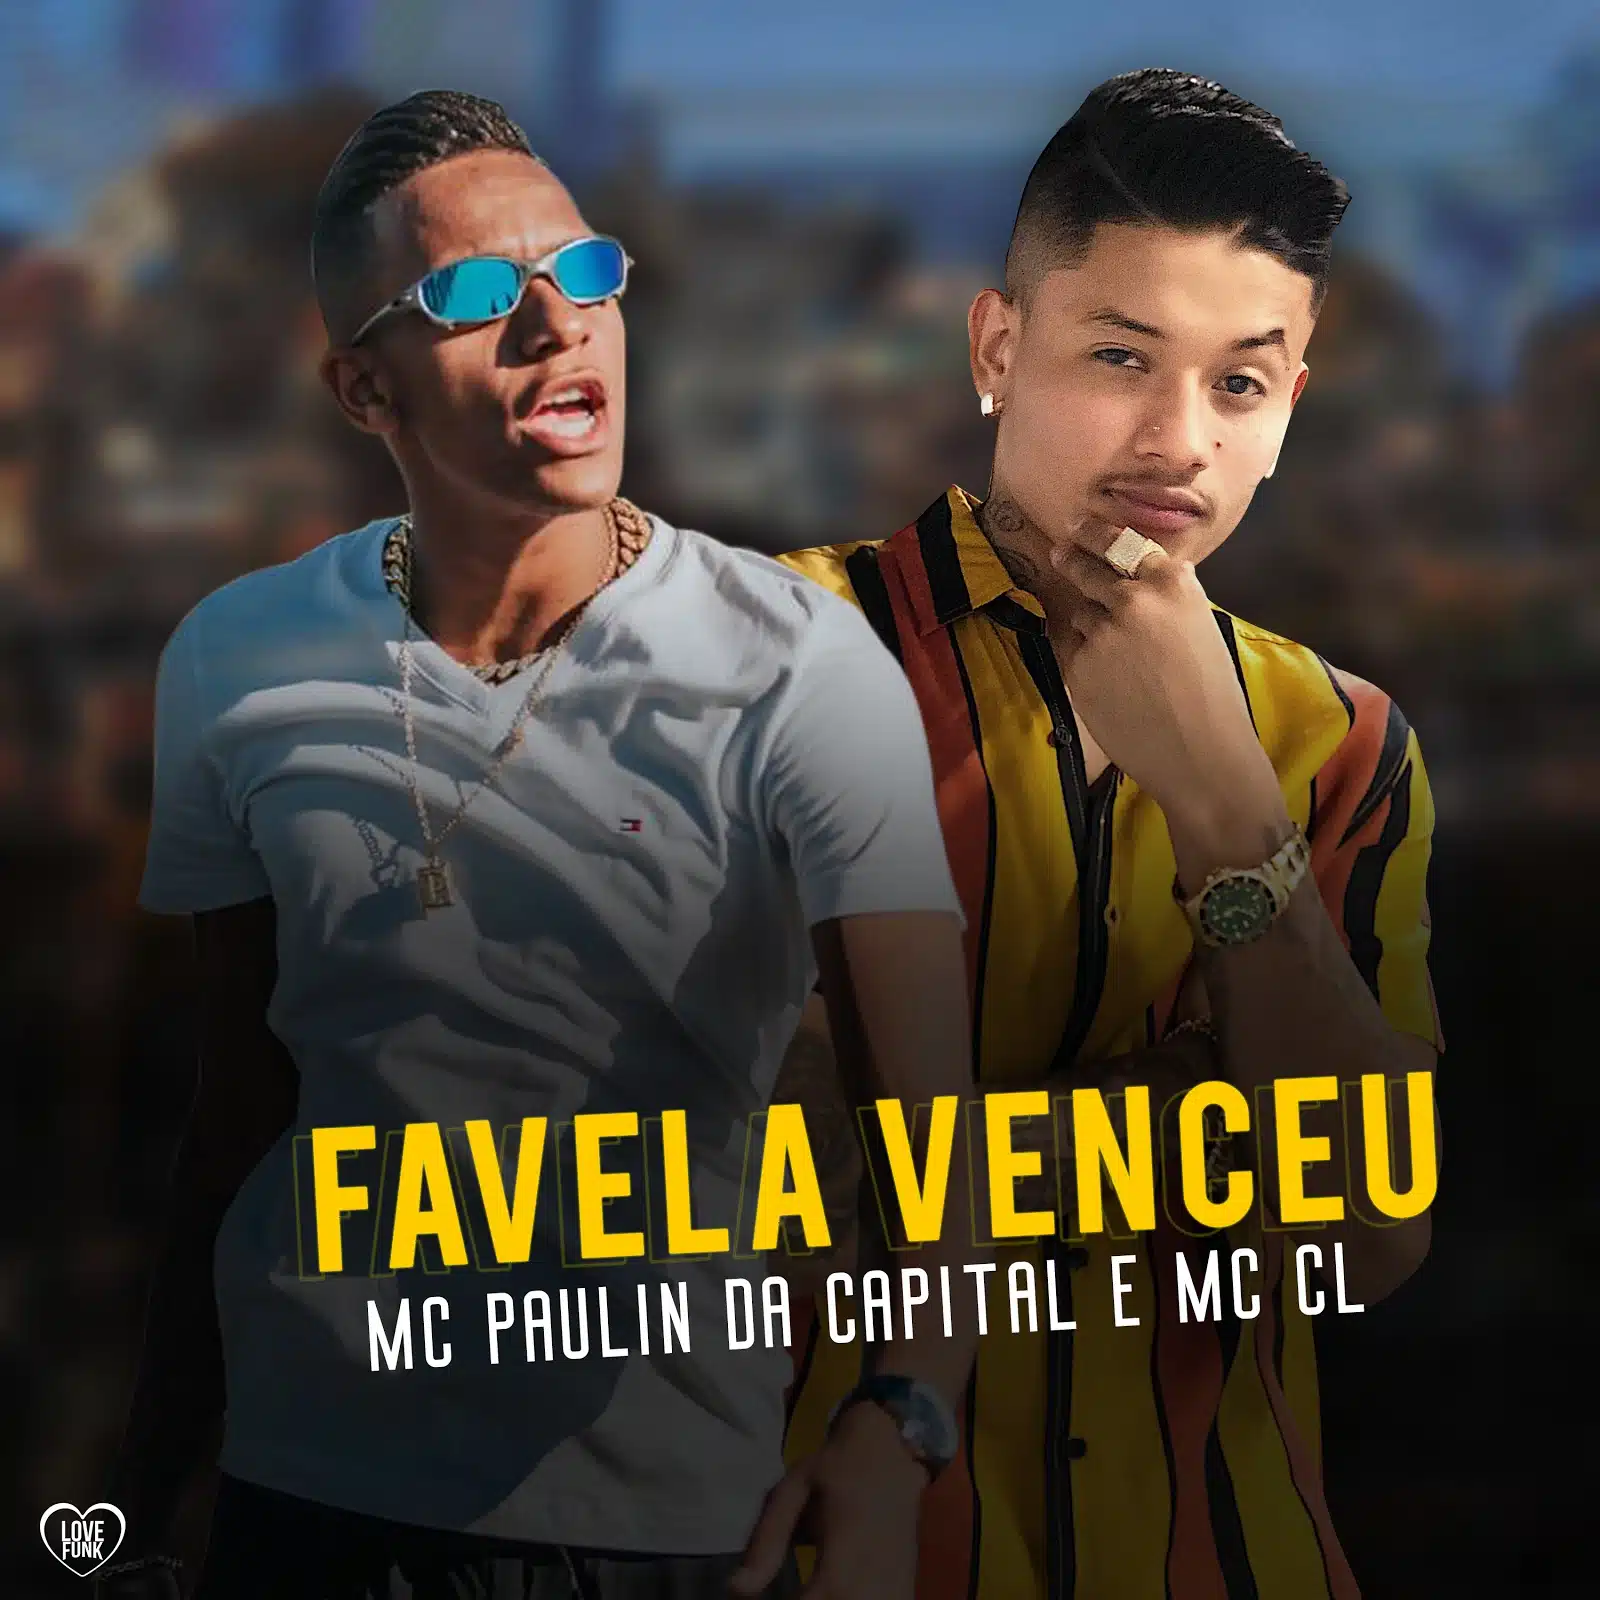 MC Paulin da Capital lança “Favela Venceu”, confira